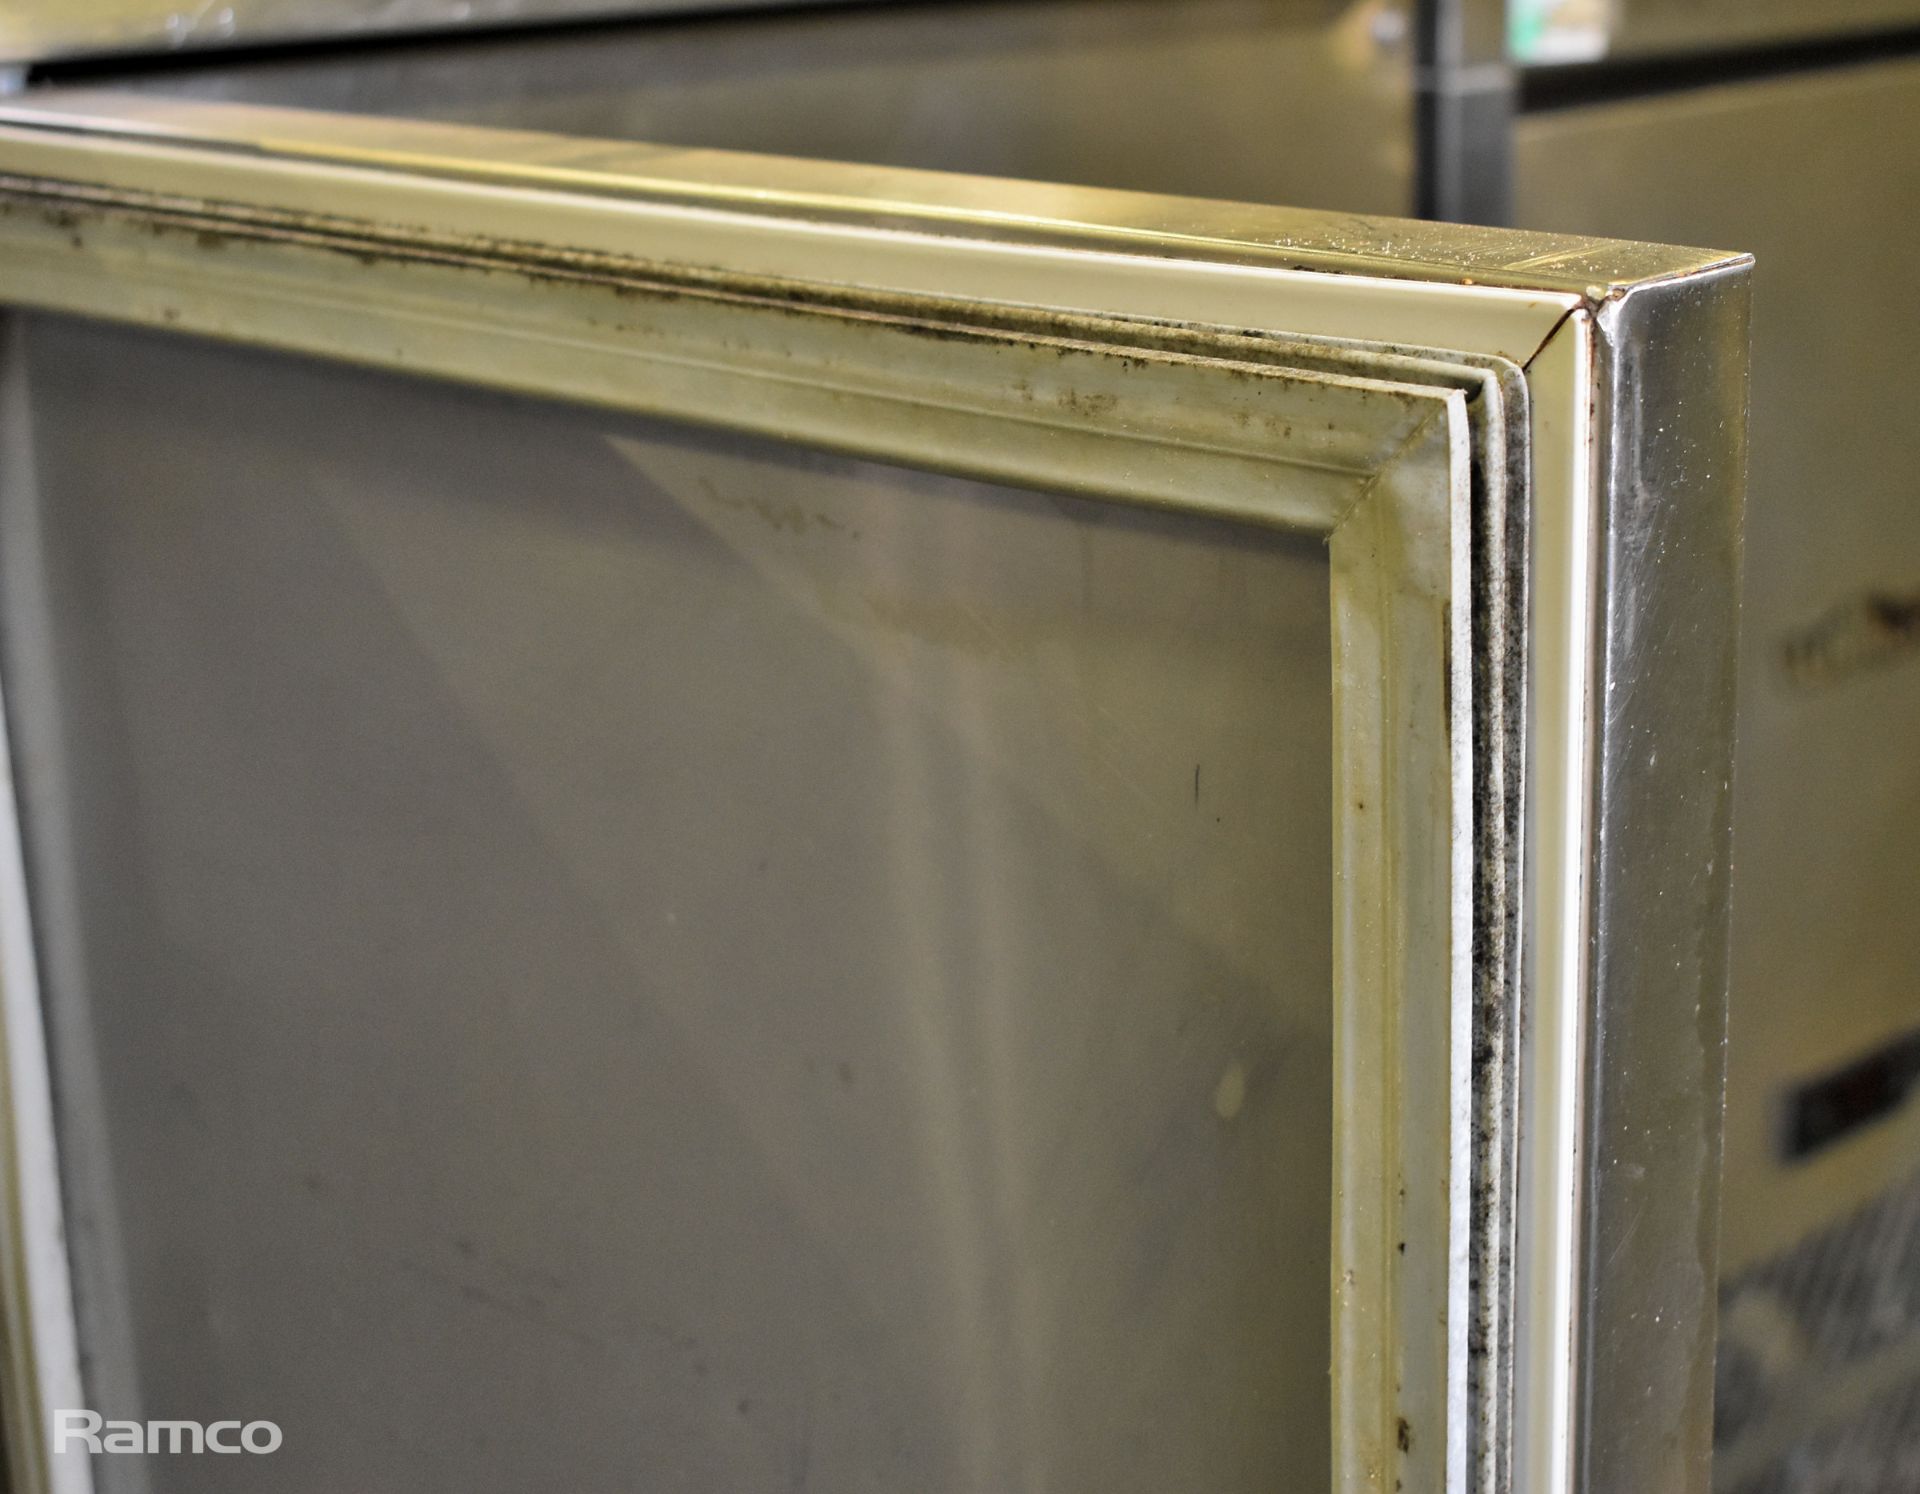 Blizzard stainless steel double door counter fridge - W 1560 x D 700 x H 860mm - Image 6 of 7